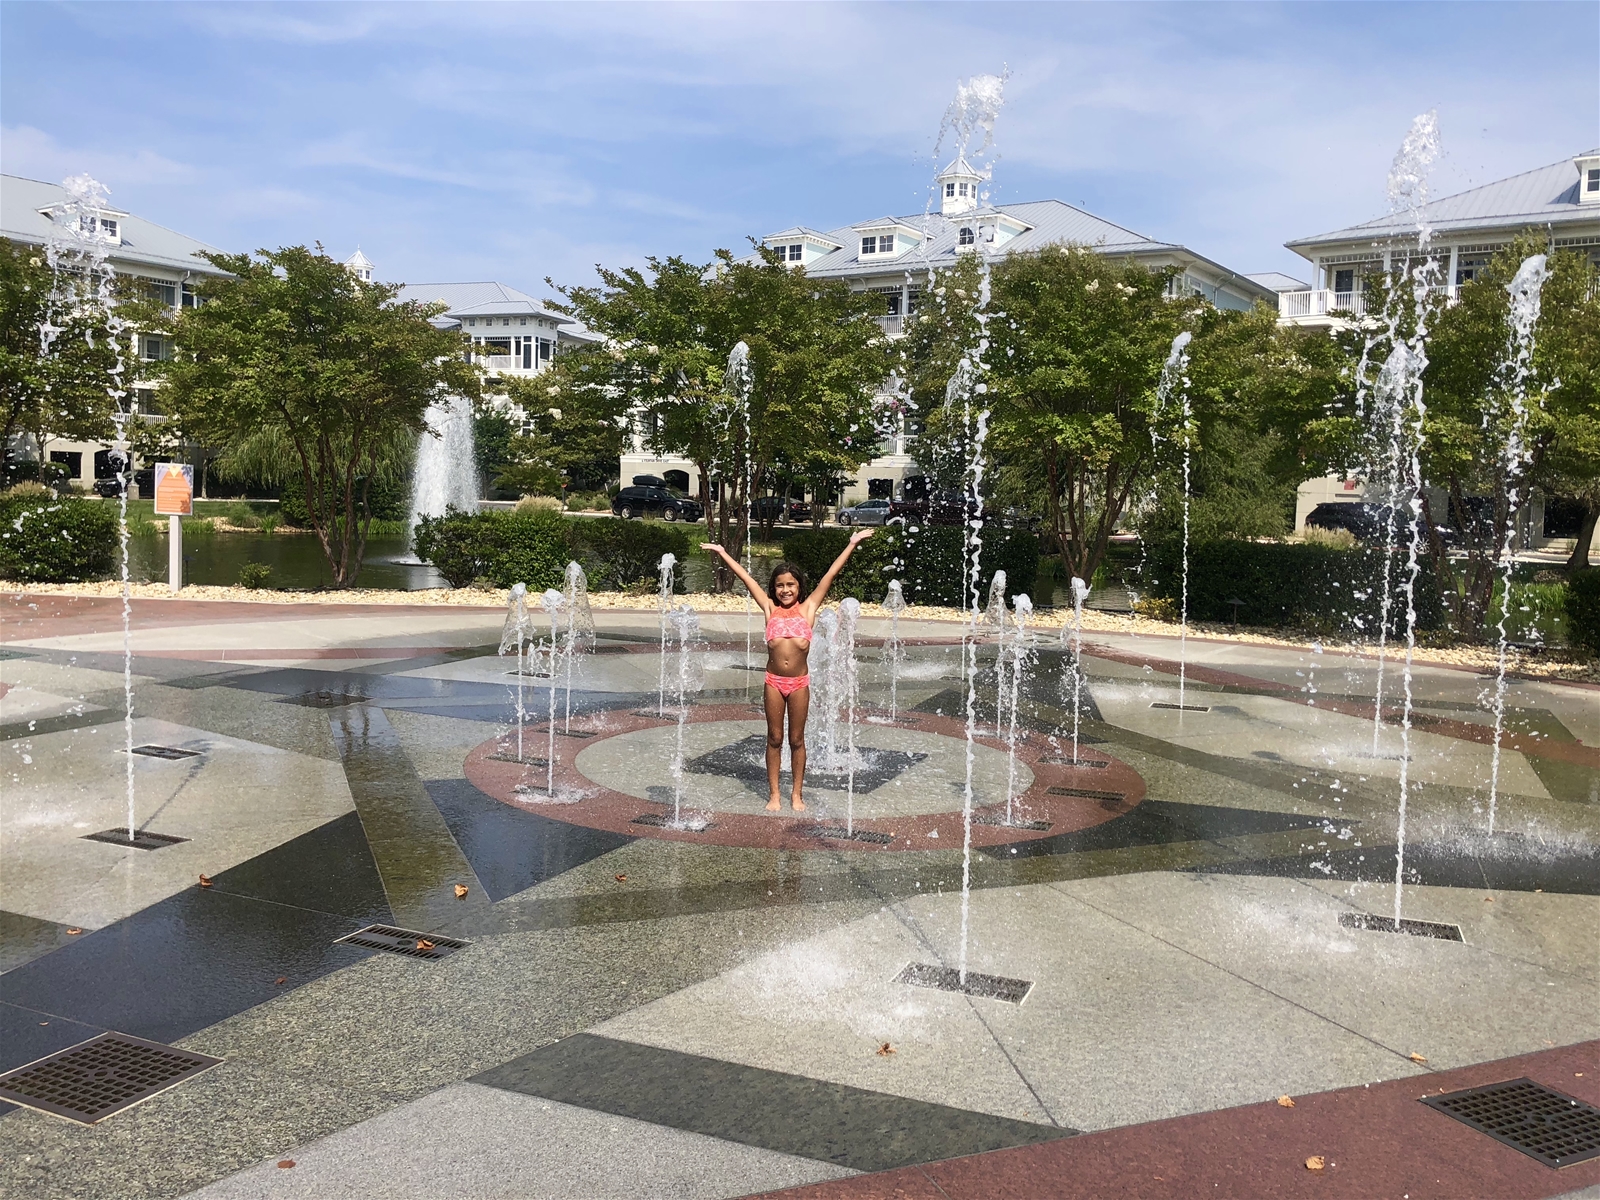 A little girl enjoying a play fountain in Sunset Island MD